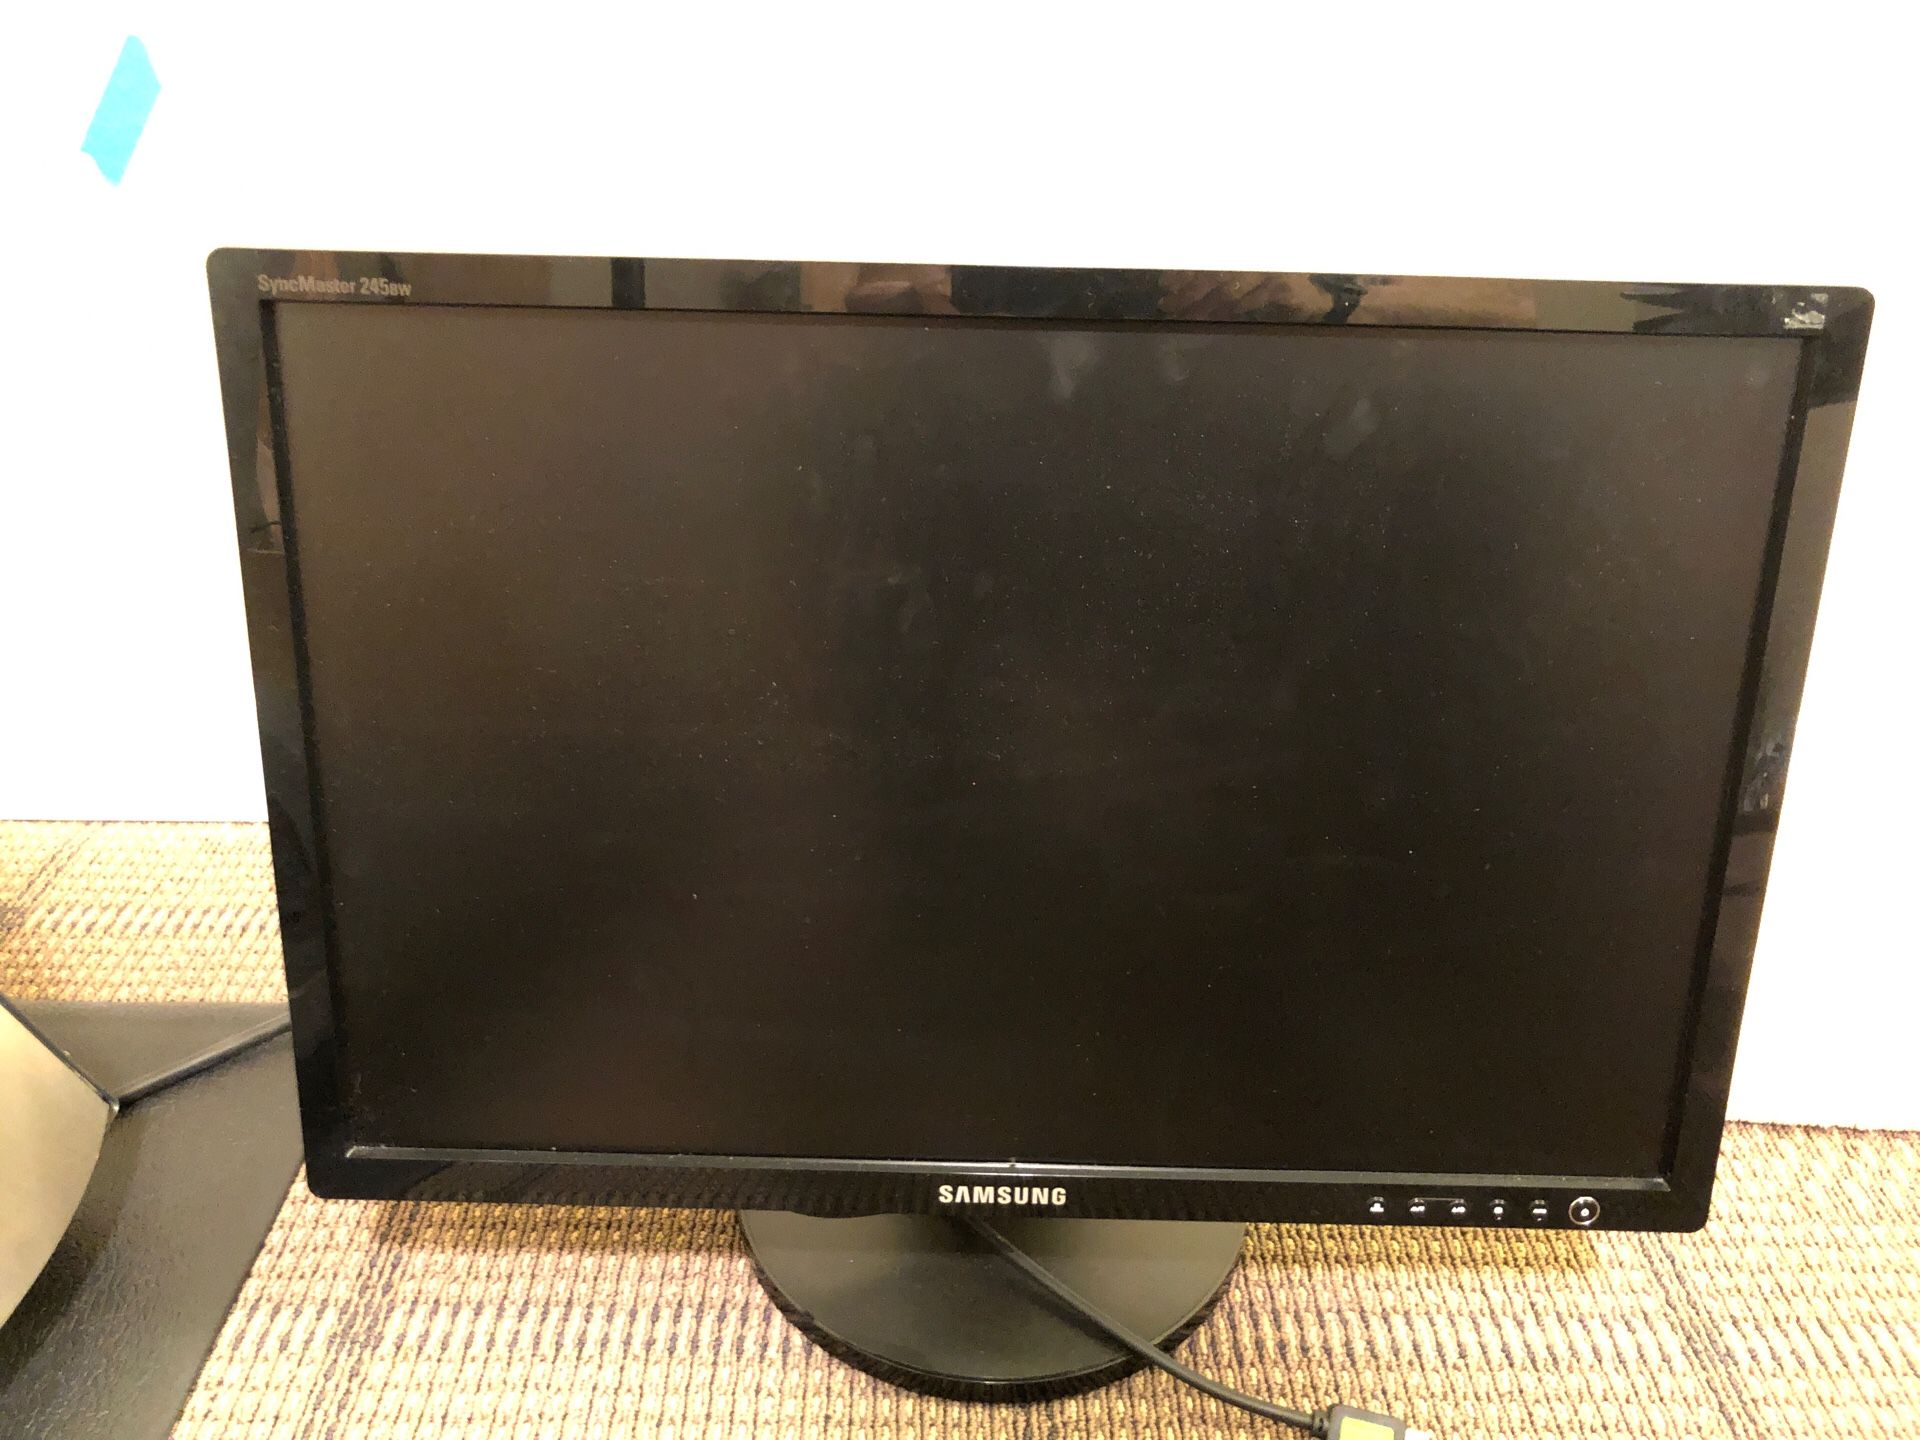 Samsung 245BW 24” monitor